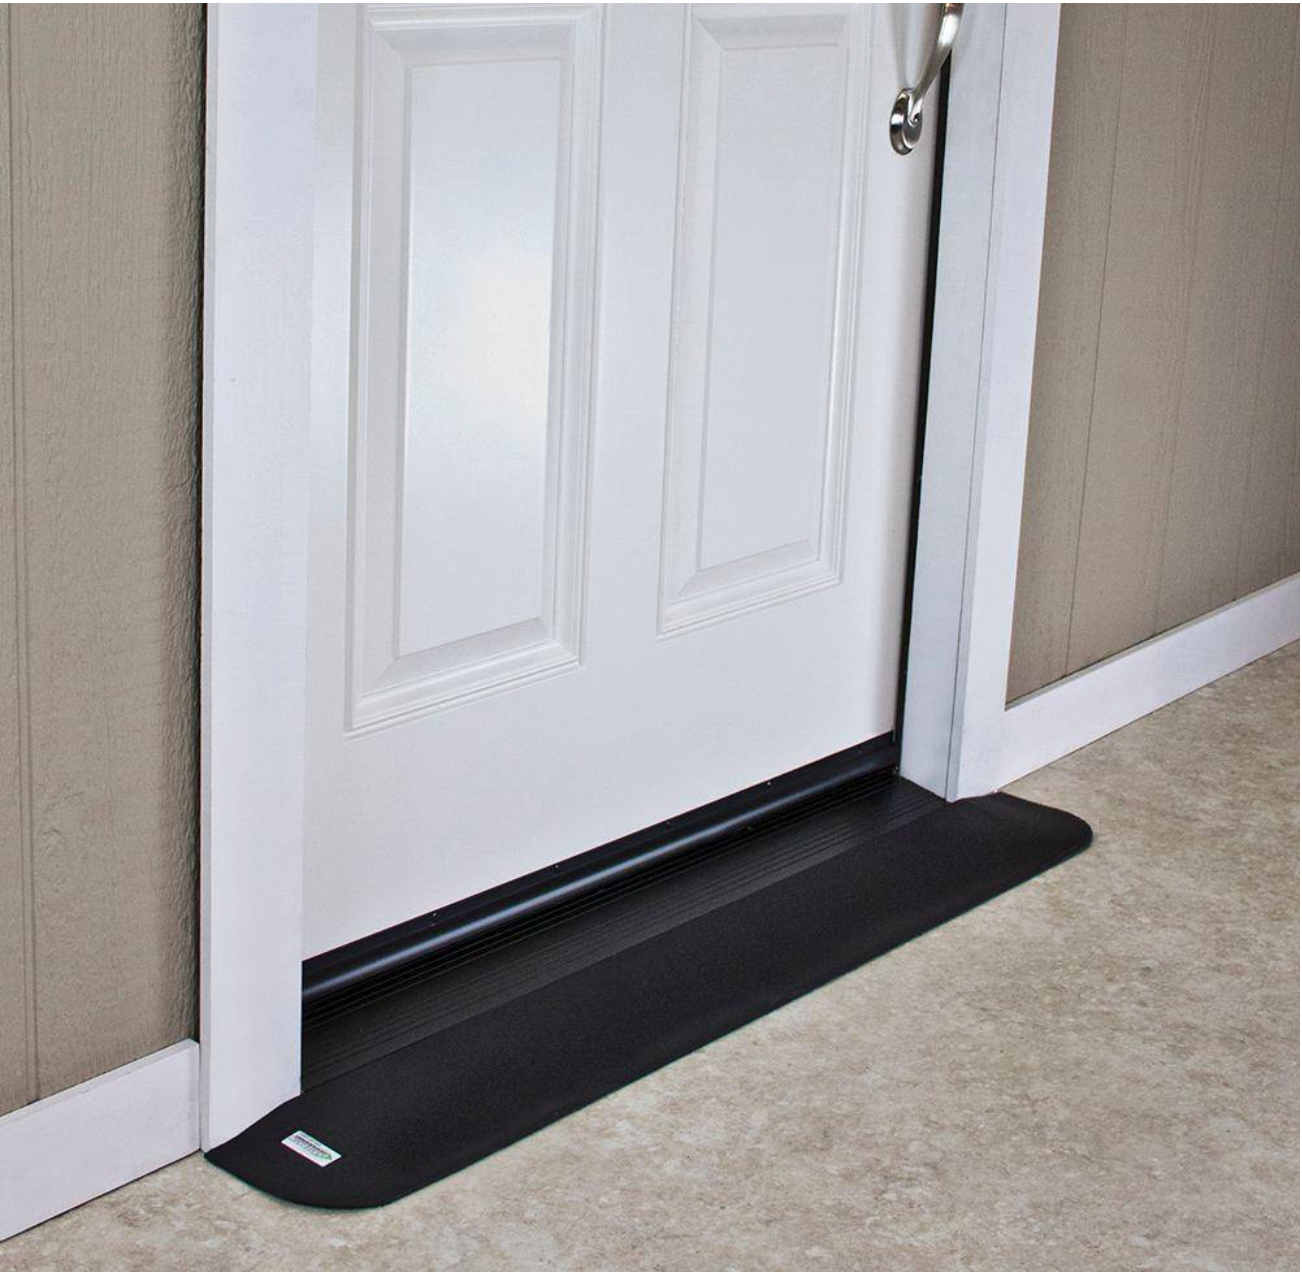 rubber threshold ramp at doorway